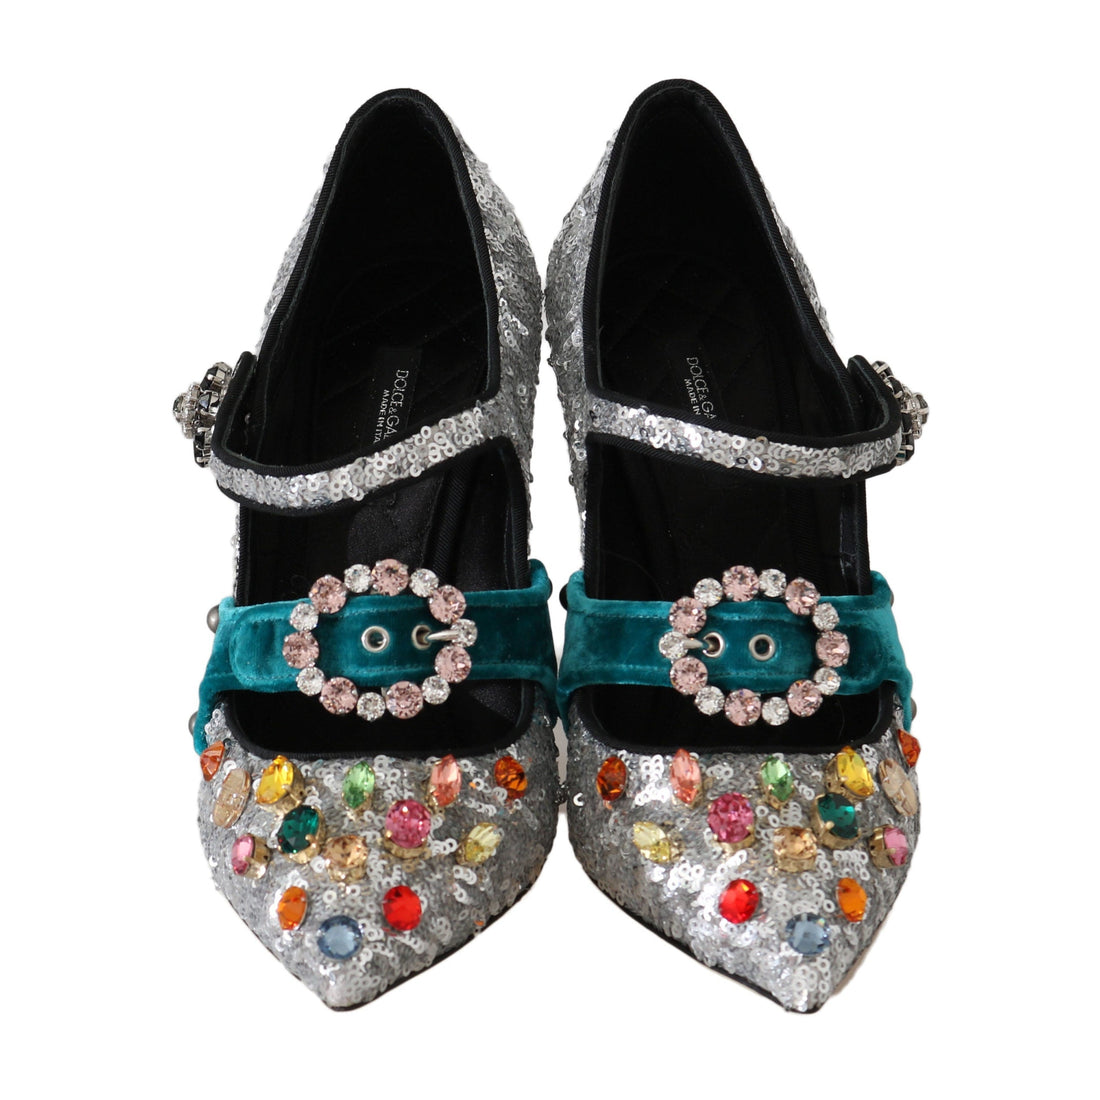 Dolce & Gabbana Elegant Silver-Black Crystal Mary Janes Pumps